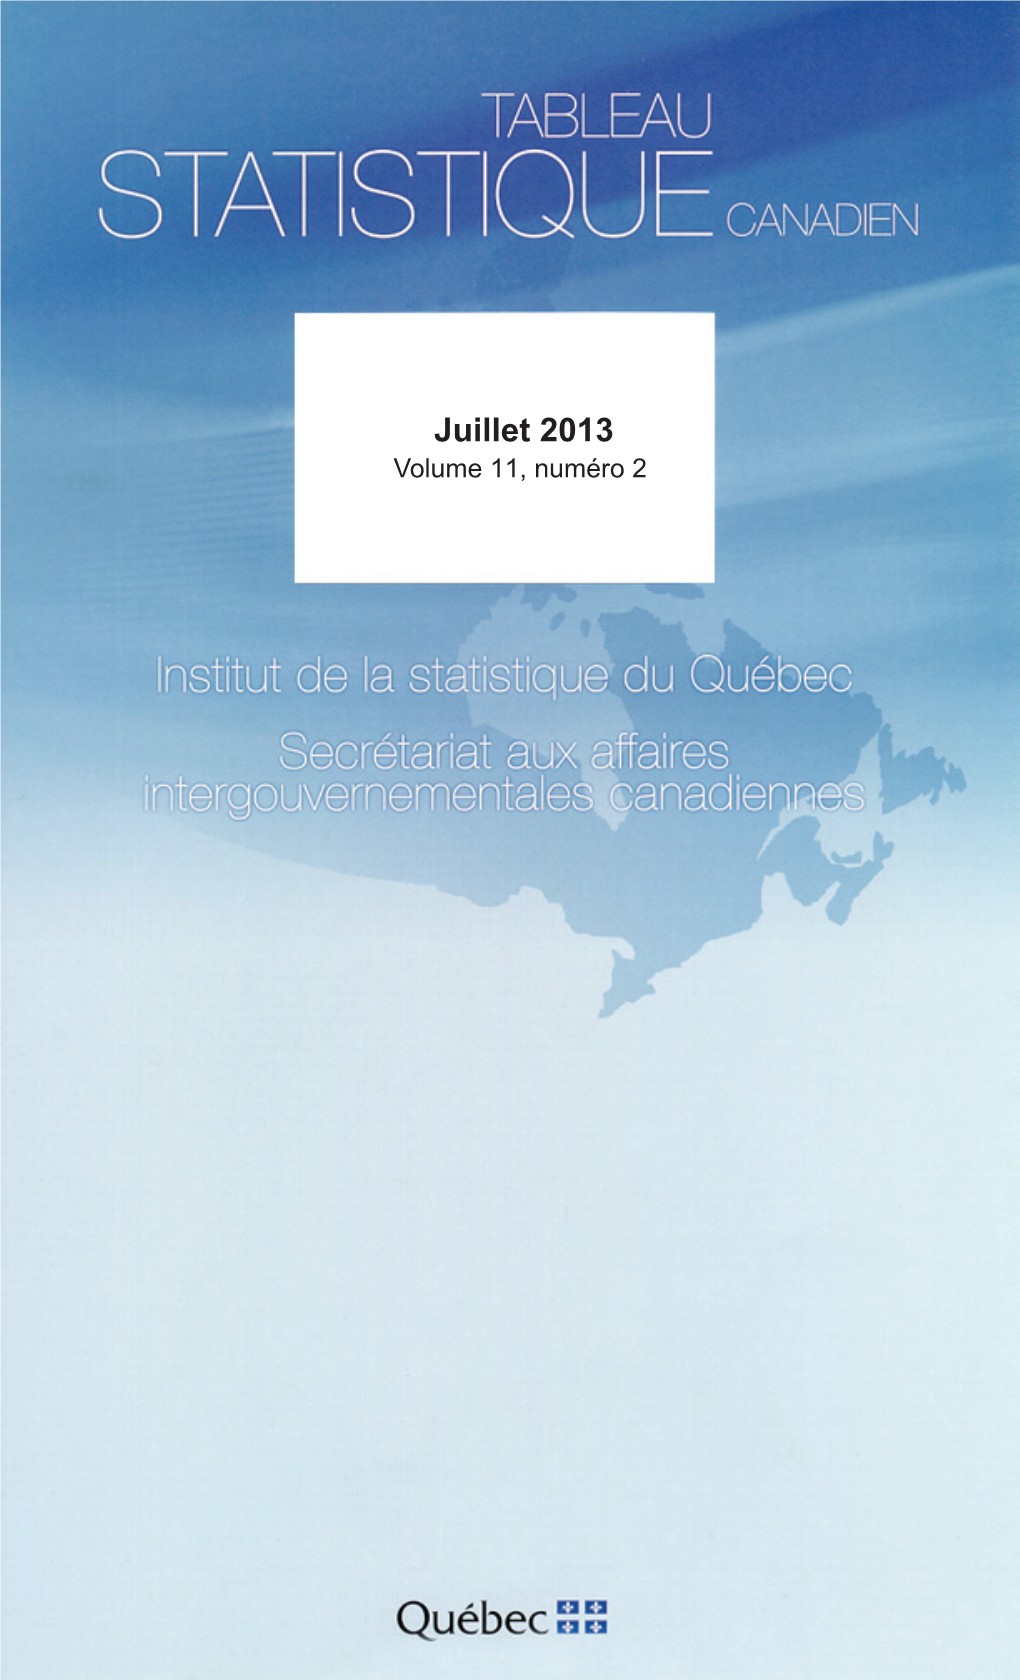 Tableau Statisque Canadien, Juillet 2013, Volume 11, Numéro 2